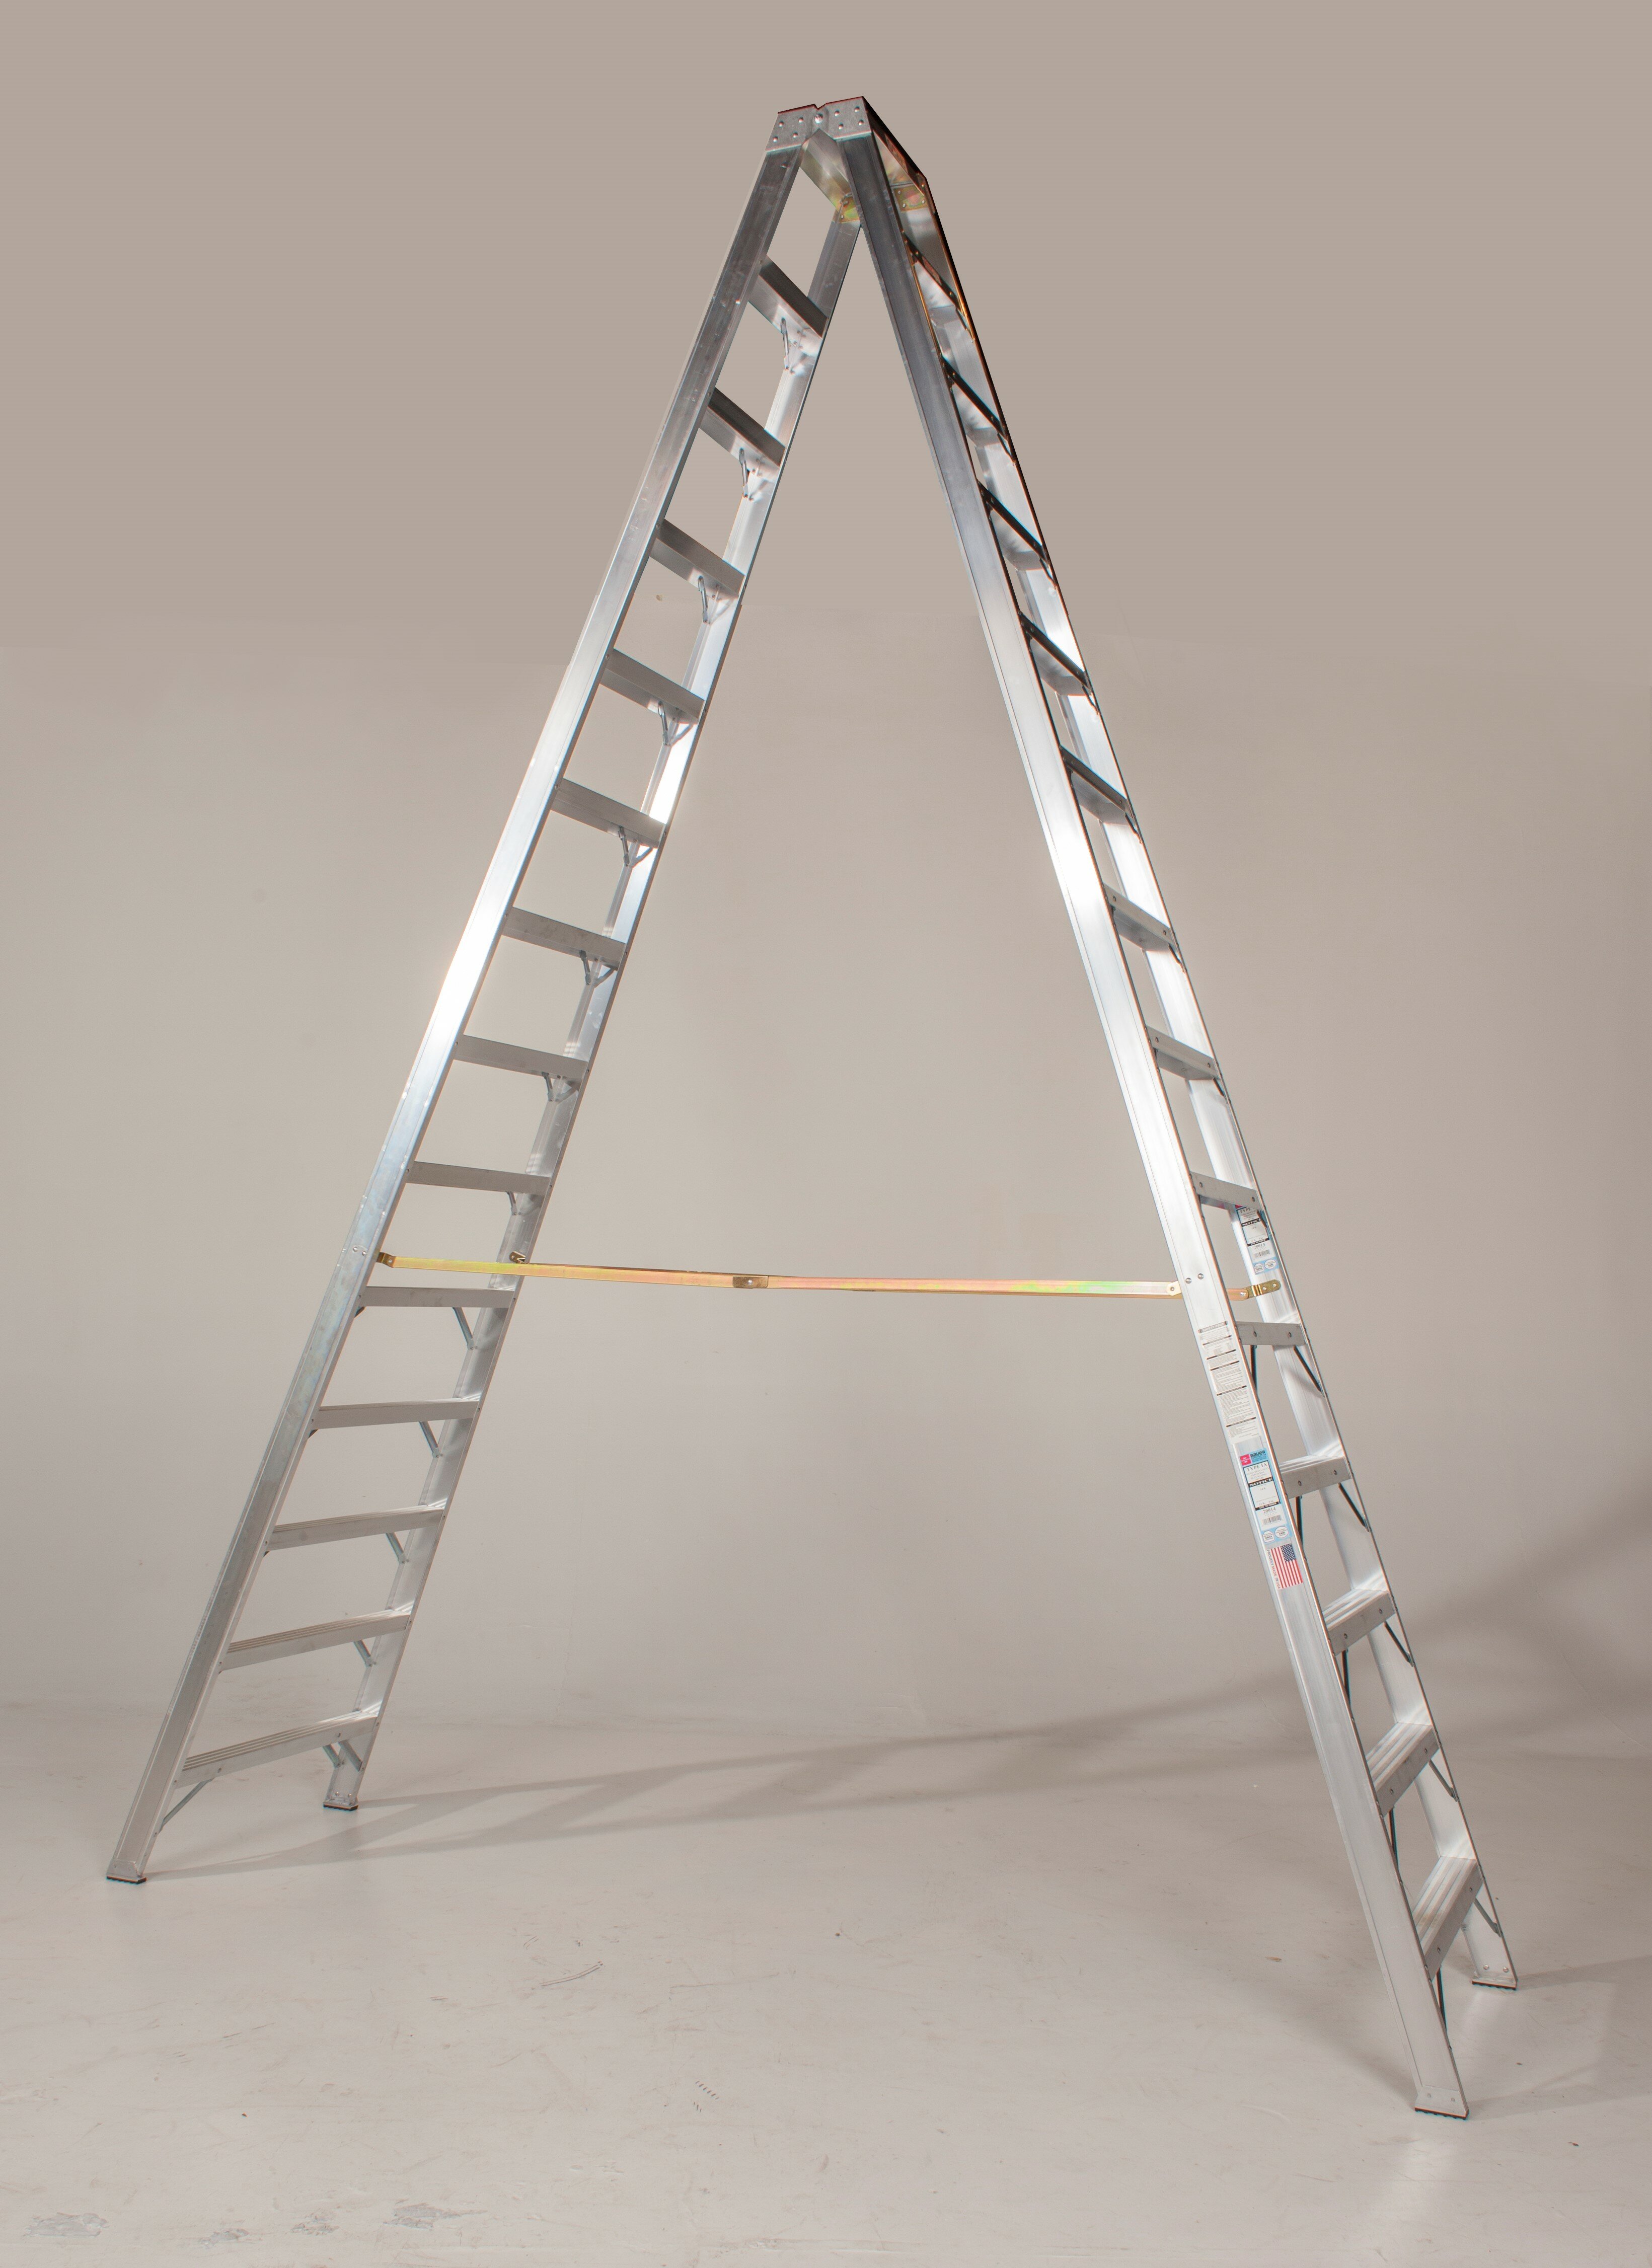 Louisville Ladder 6-Foot Fiberglass Cross Step Ladder, Type IA, 300-pound  Load Capacity, FXS1506